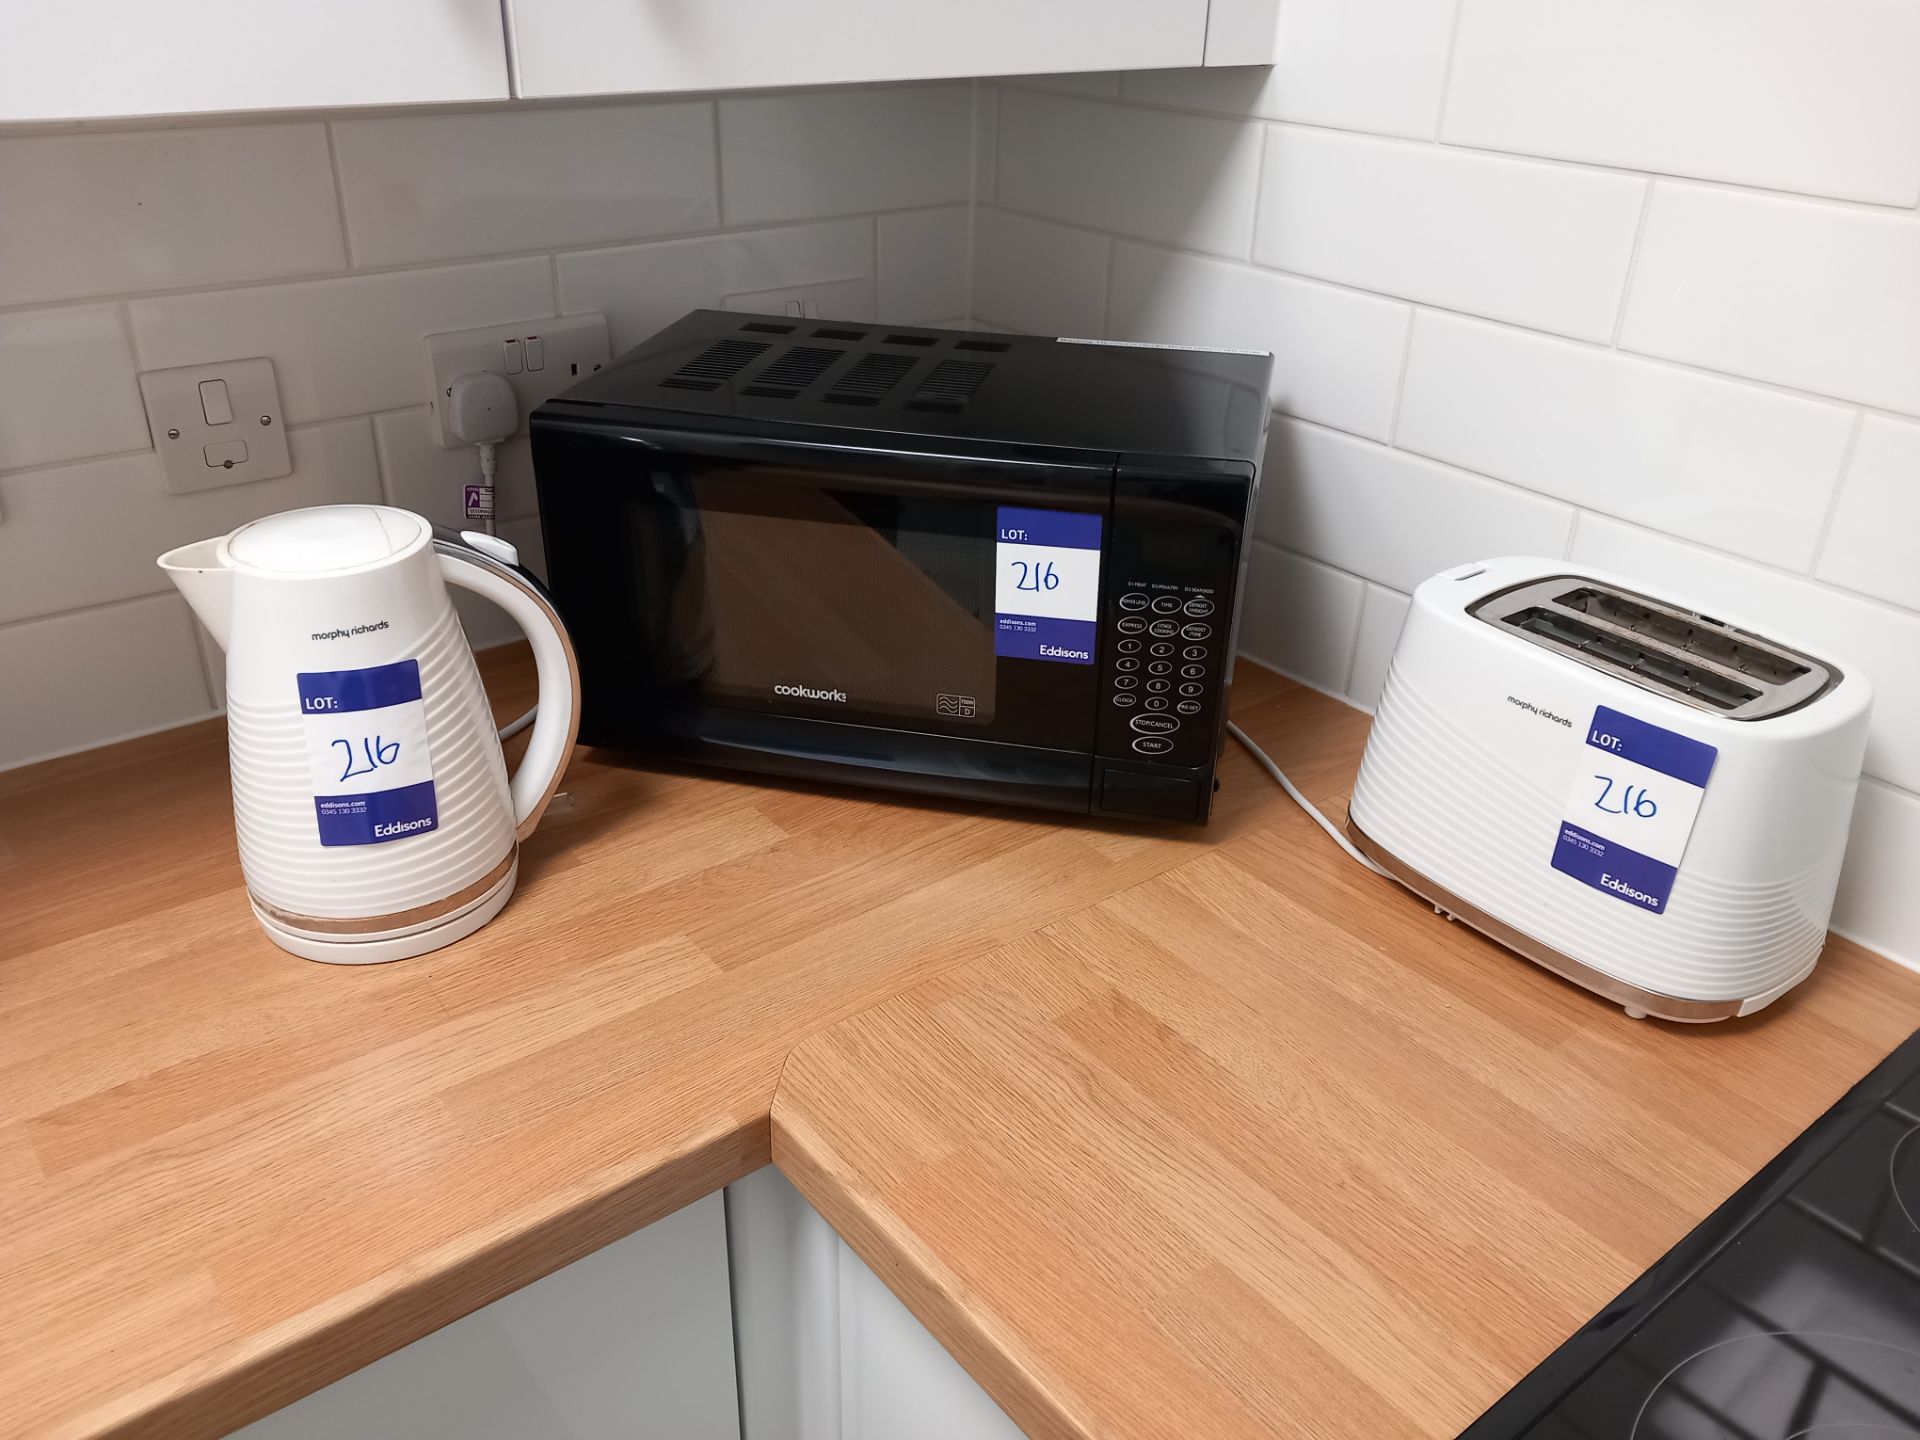 Santo Oko undercounter fridge, Cookworks microwave, Morphy Richards Toaster & Kettle - Image 2 of 2